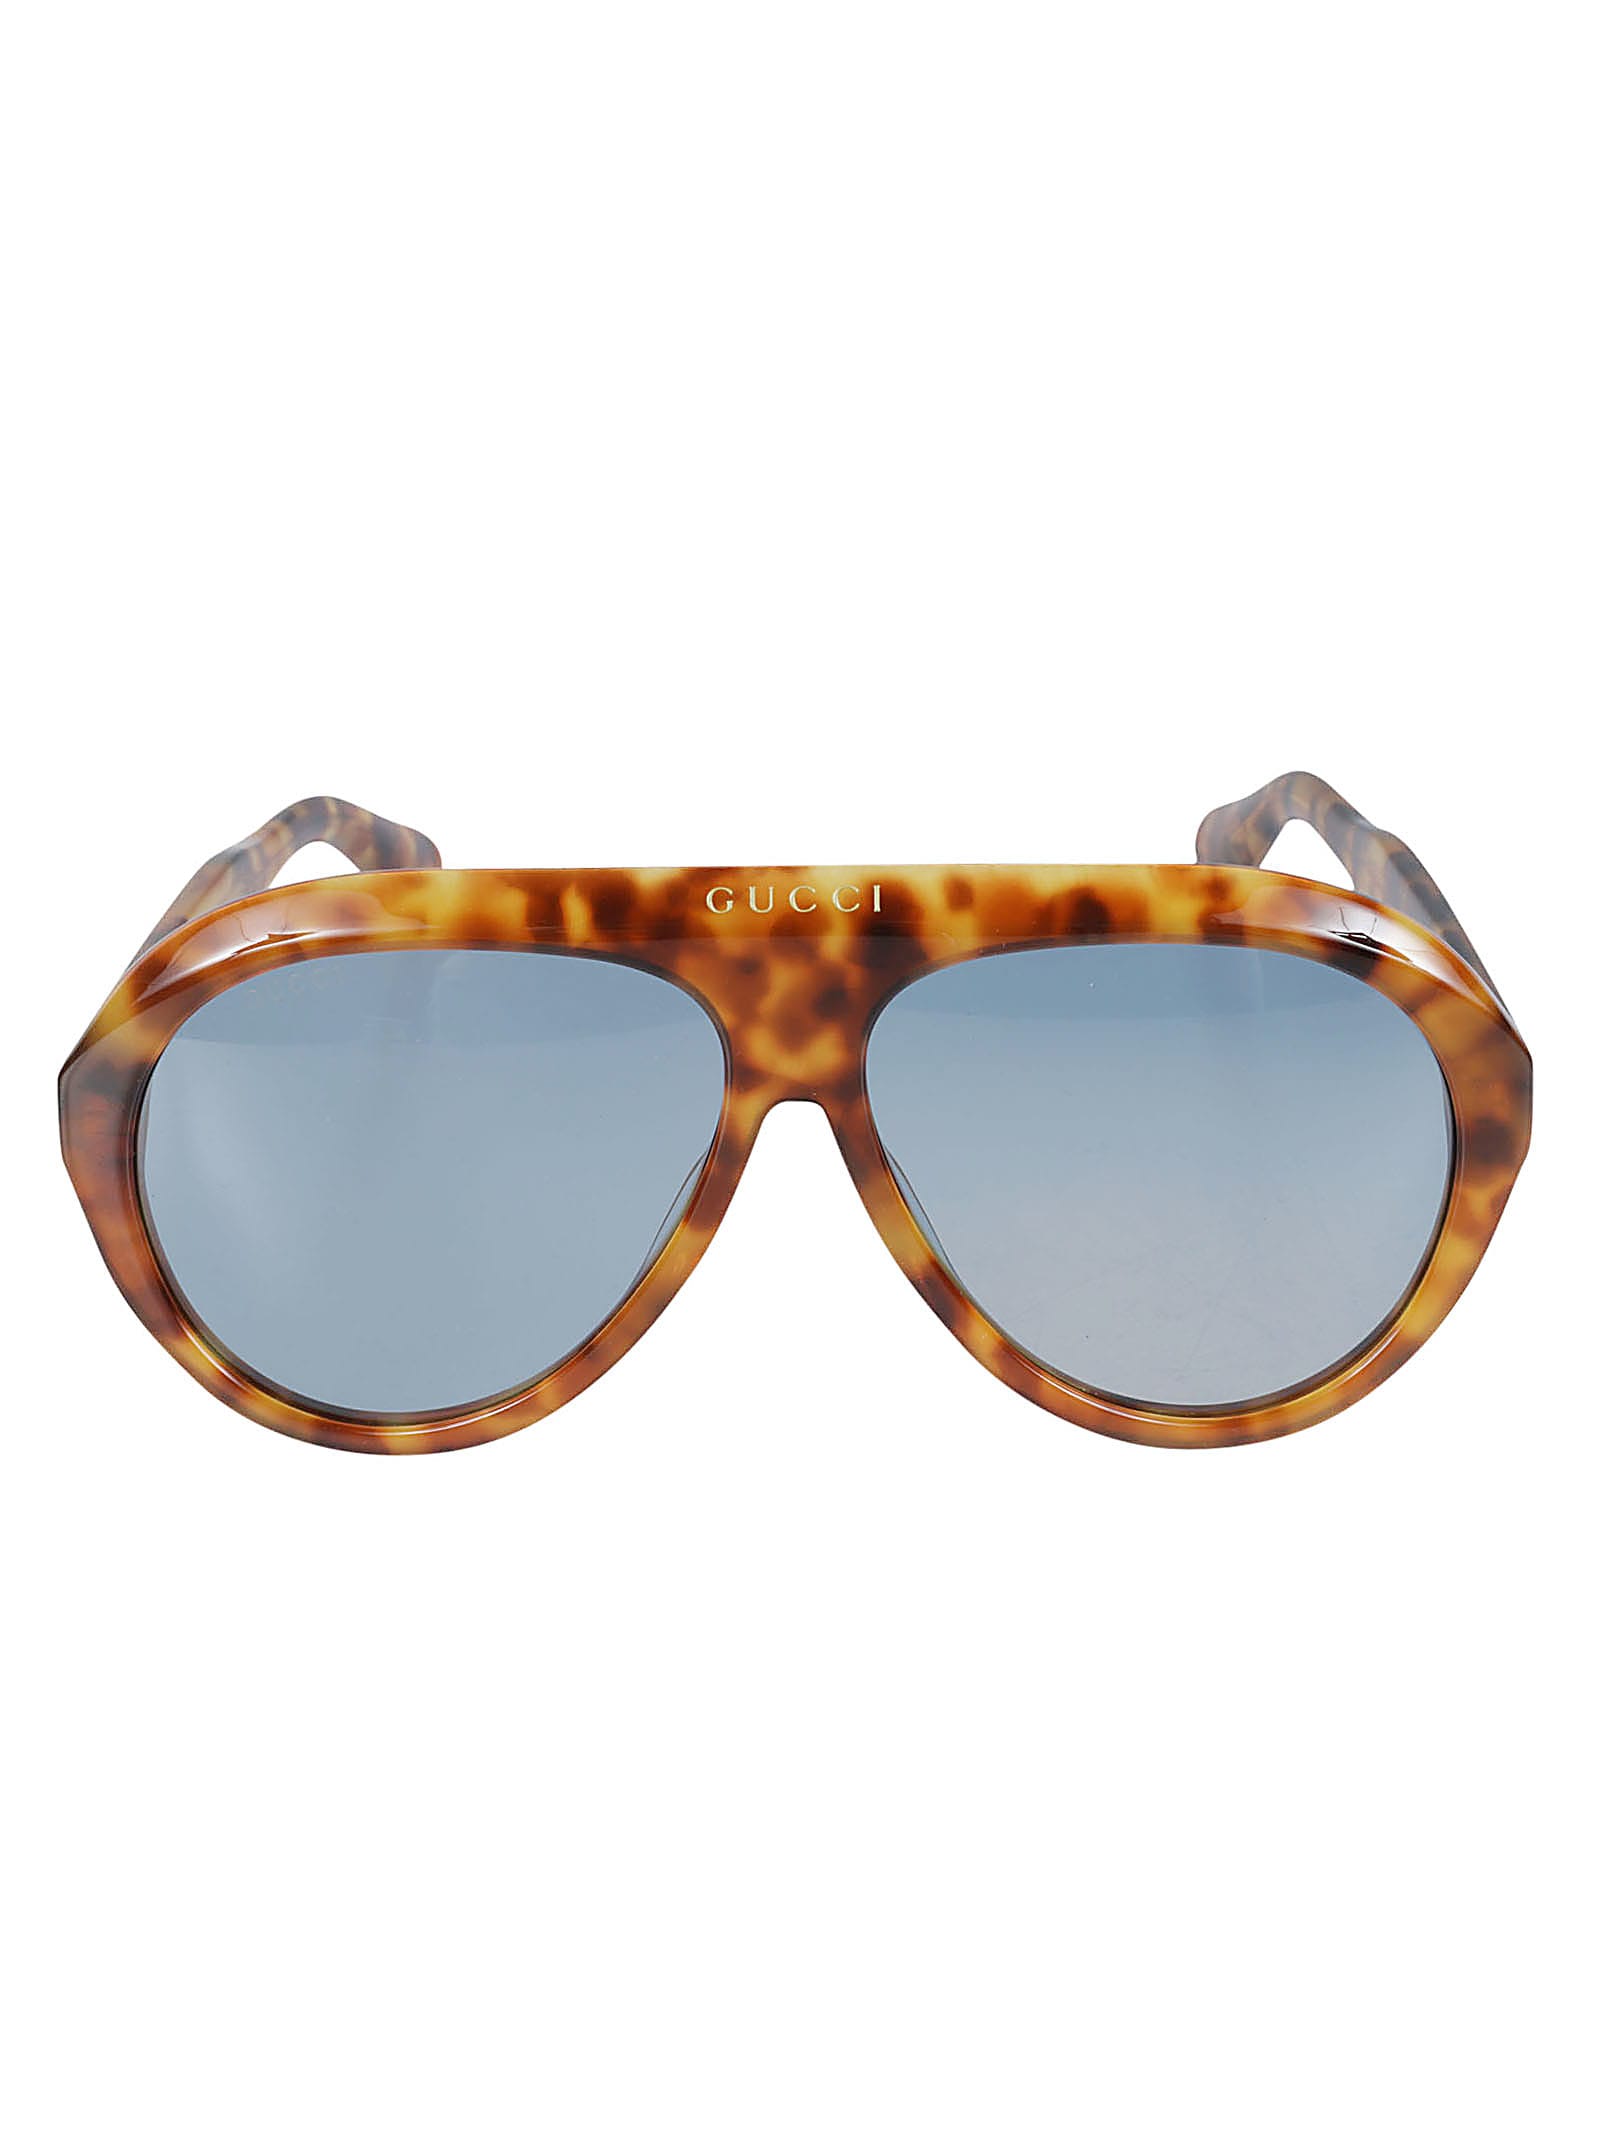 Gucci Aviator Framed Sunglasses